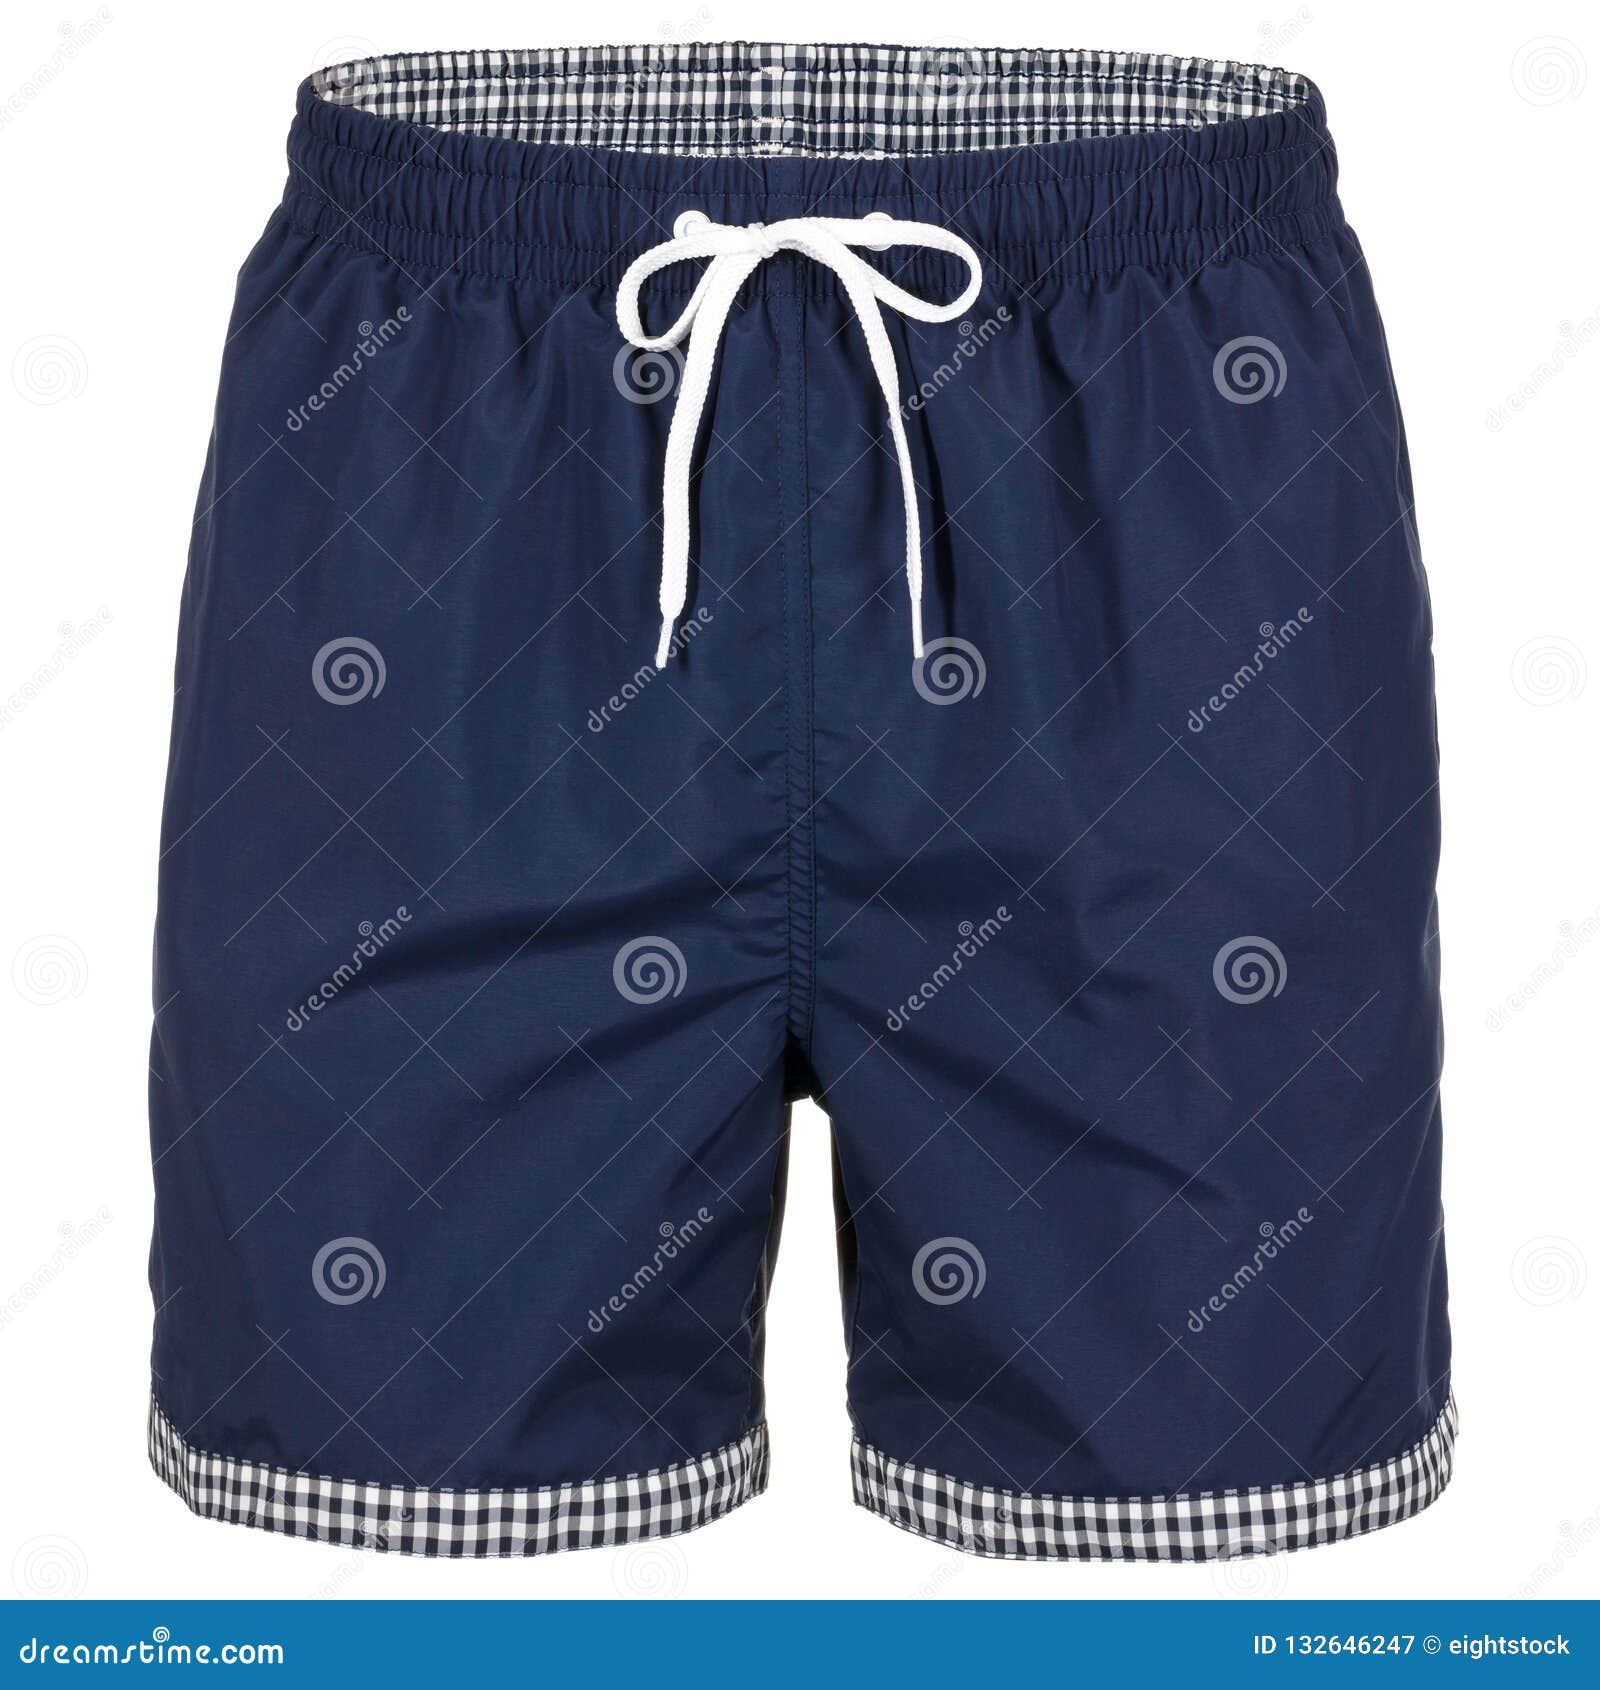 Aayomet Board Shorts Men'S Mens Summer Fashion Leisure Waterproof Lace Up  Pocket Hot Spring Holiday Beach Beach Pants Swimming Trunks Shorts,Black  5XL - Walmart.com